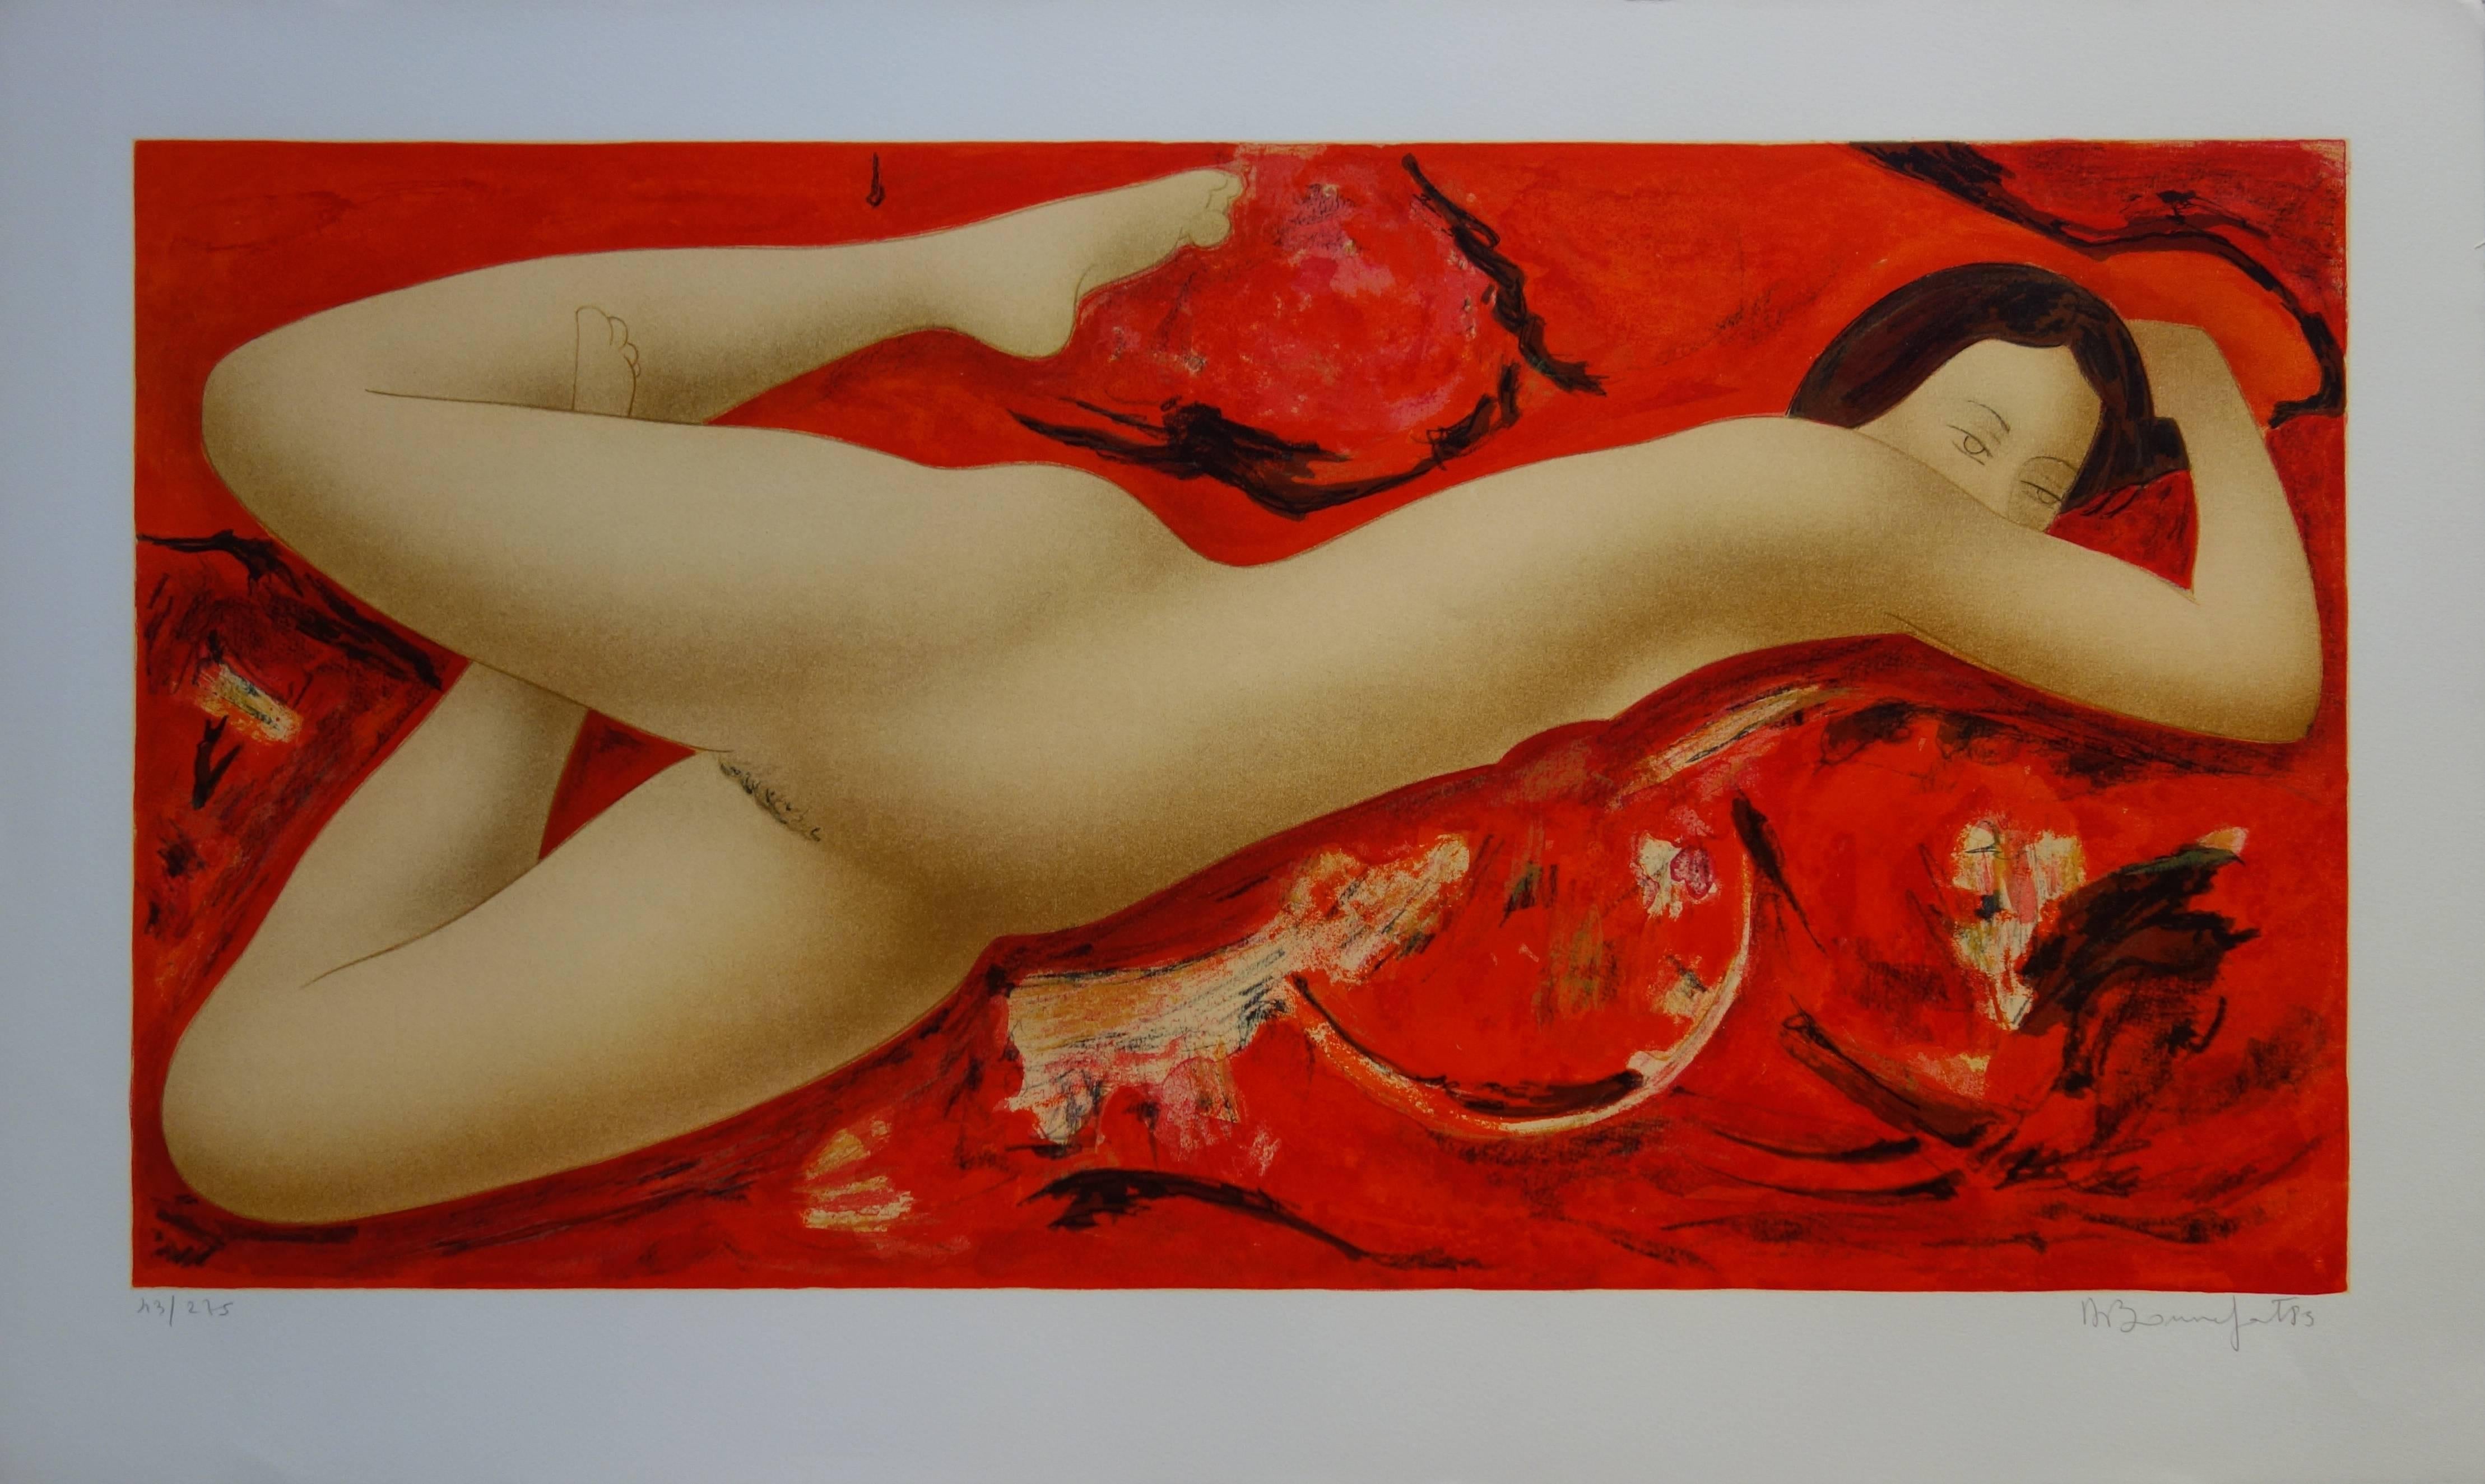 Alain Bonnefoit Nude Print - Fire and Flame - Original handsigned lithograph - 275ex